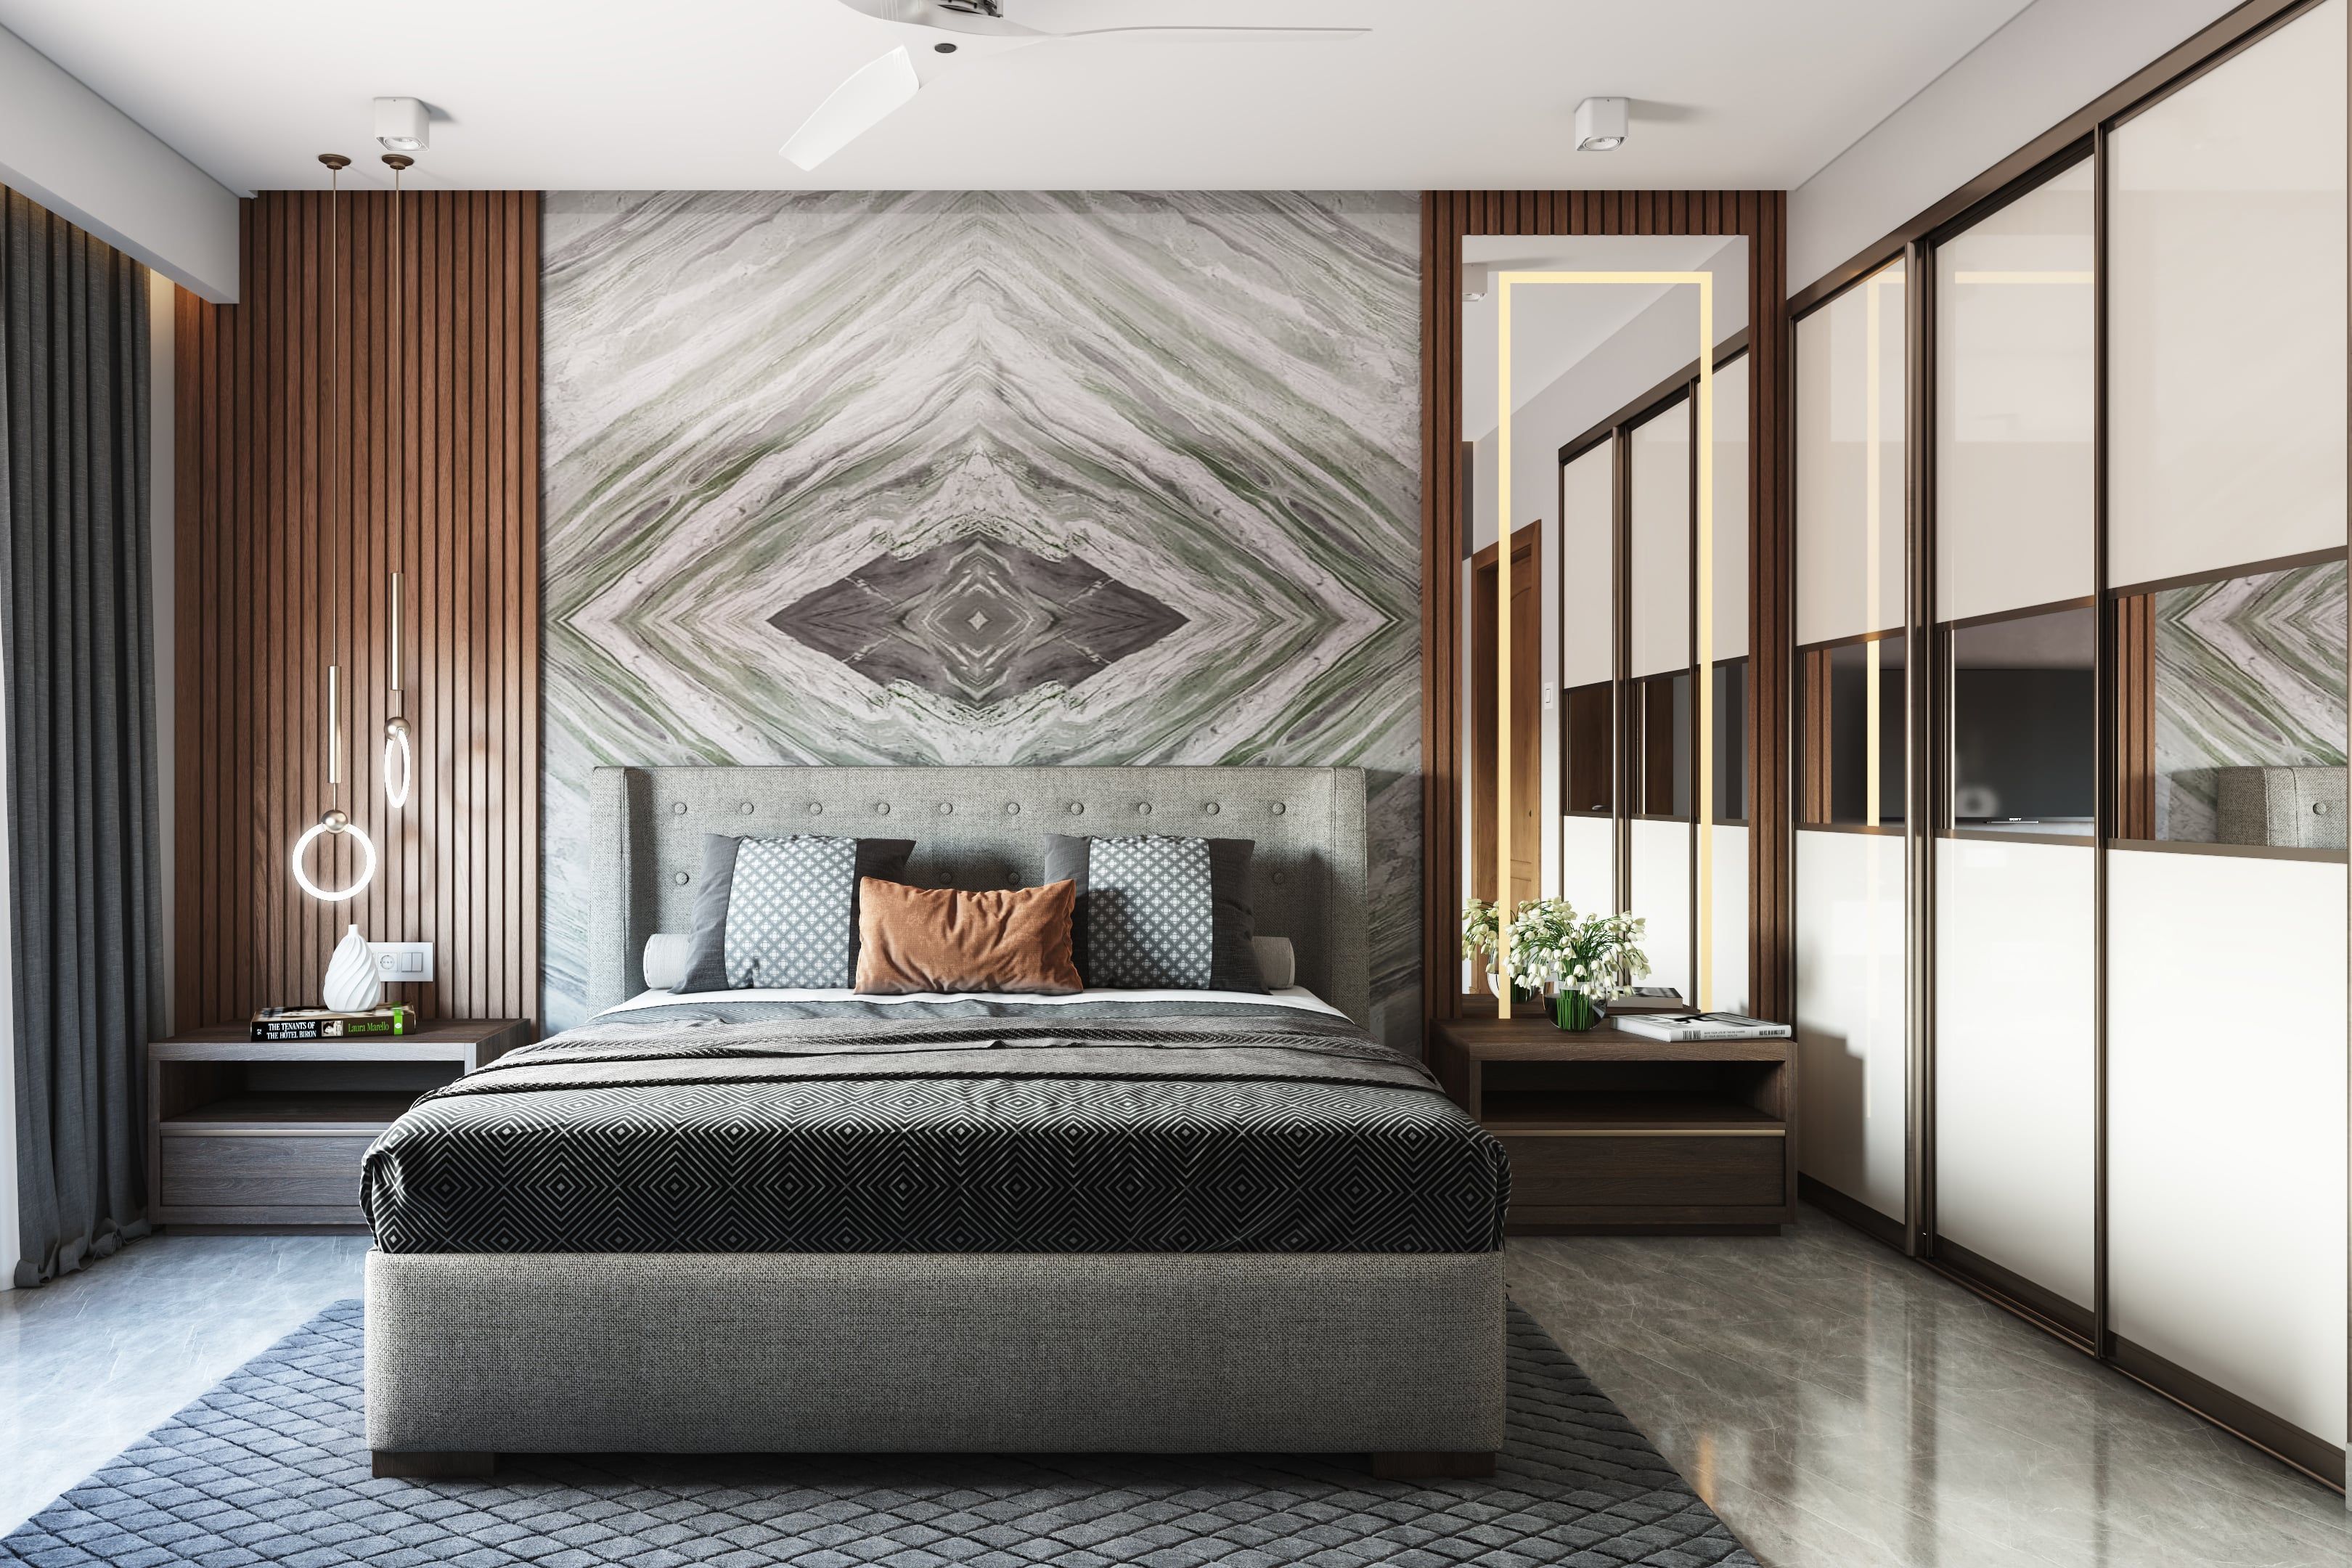 Modern Master Bedroom Design With Elegant Marble Wall Tile